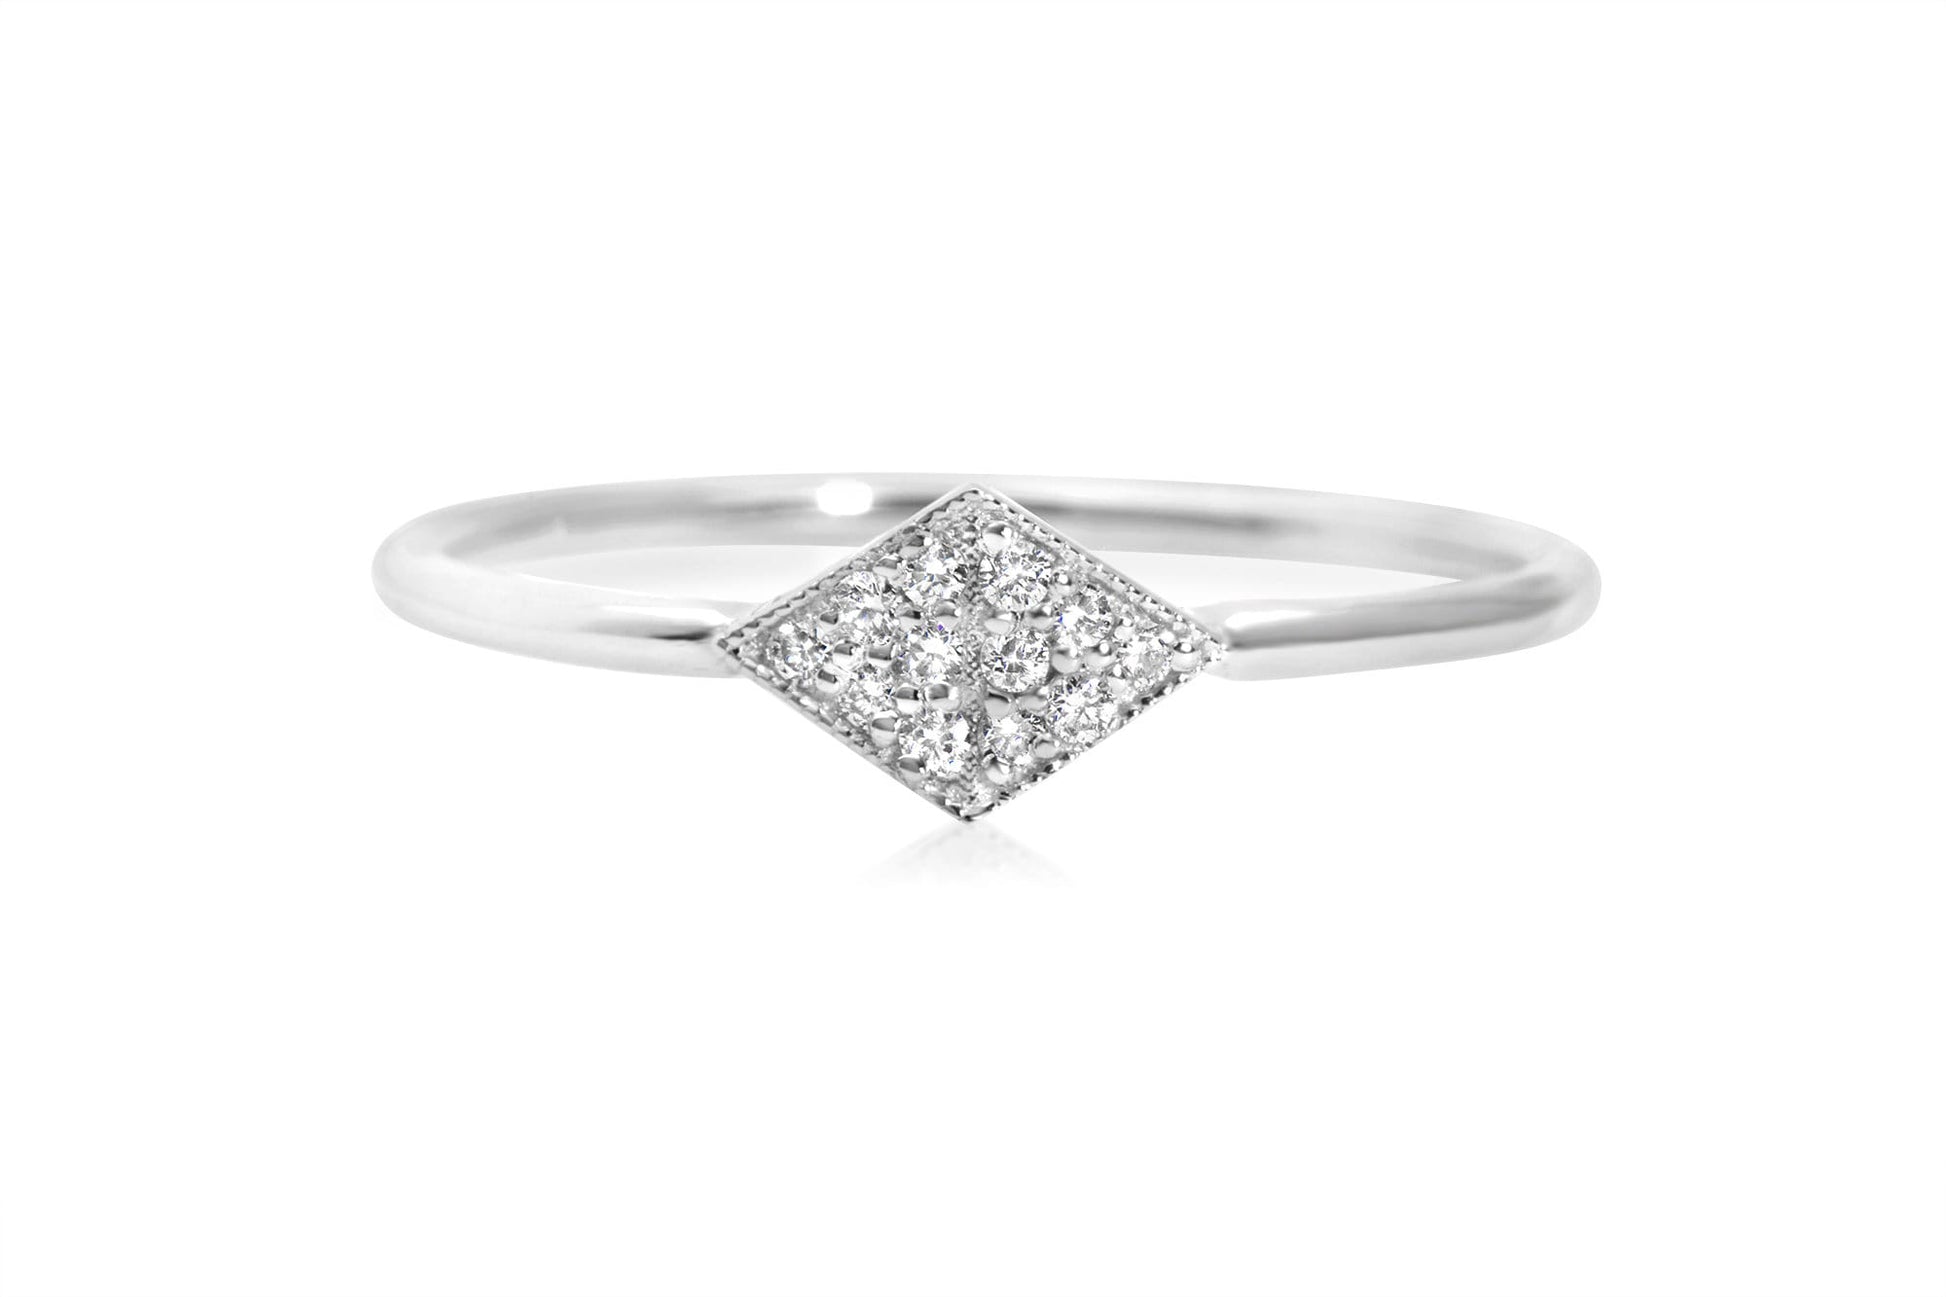 14K Gold Unique Modern Diamond Ring, Trendy White Diamond Micro Pave Ring